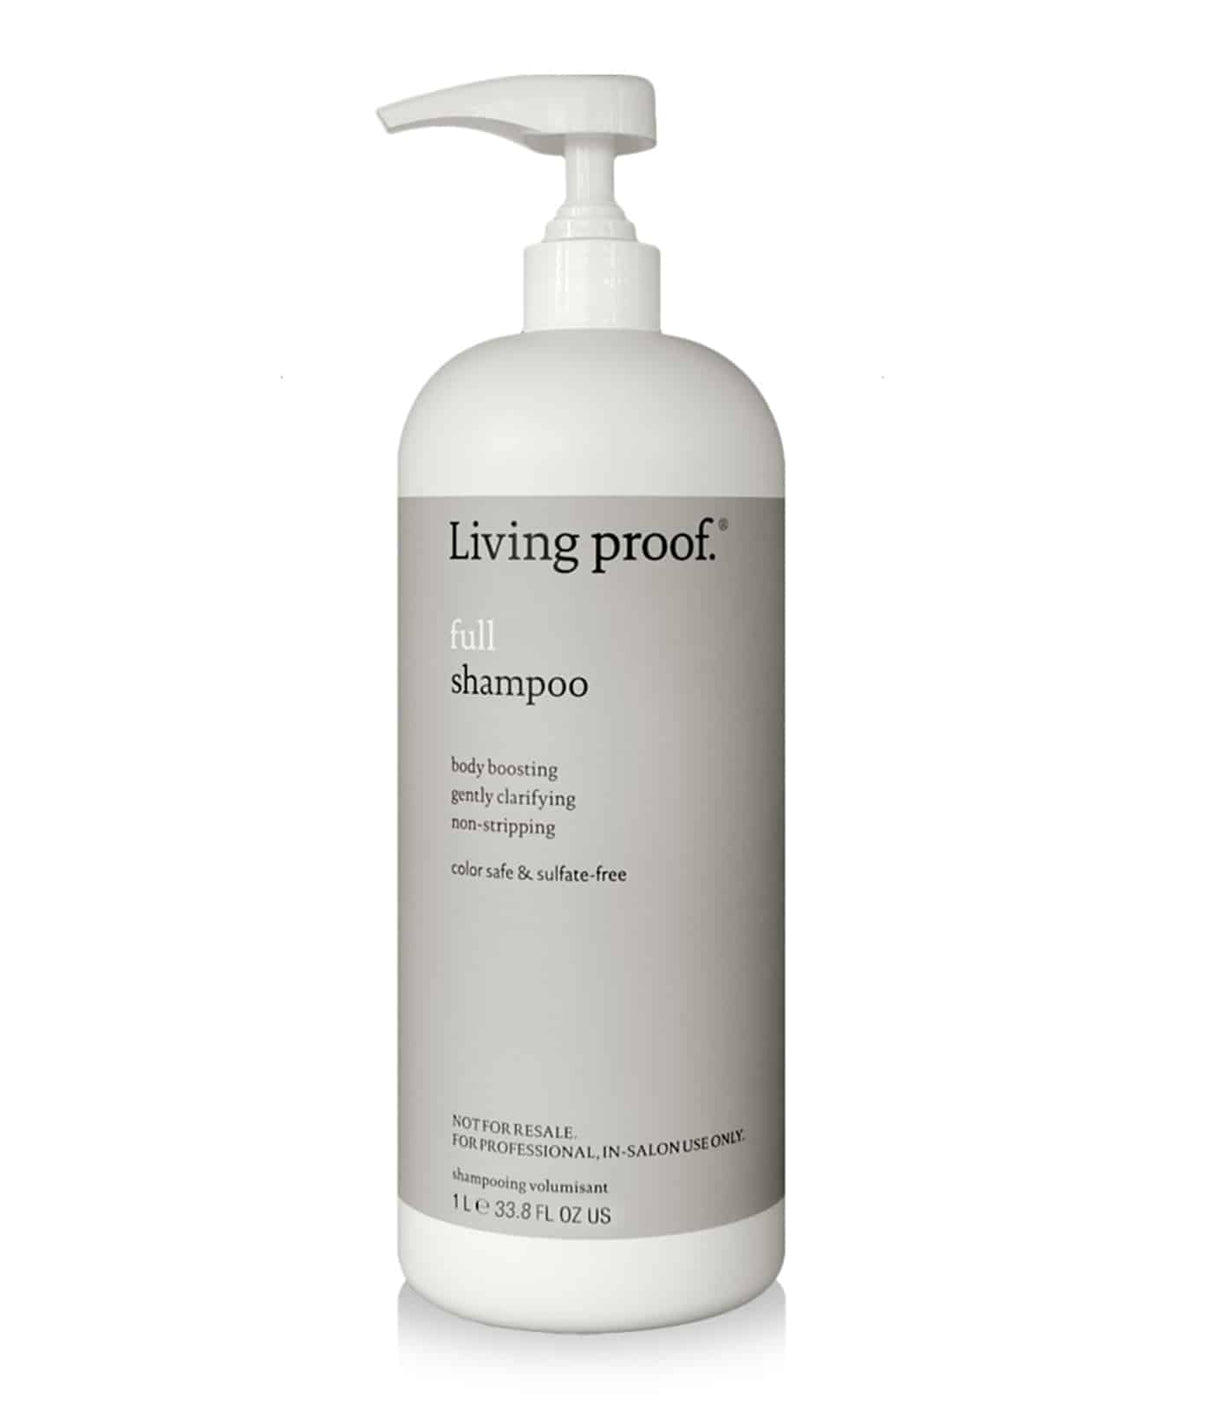 Full Shampoo de Living Proof